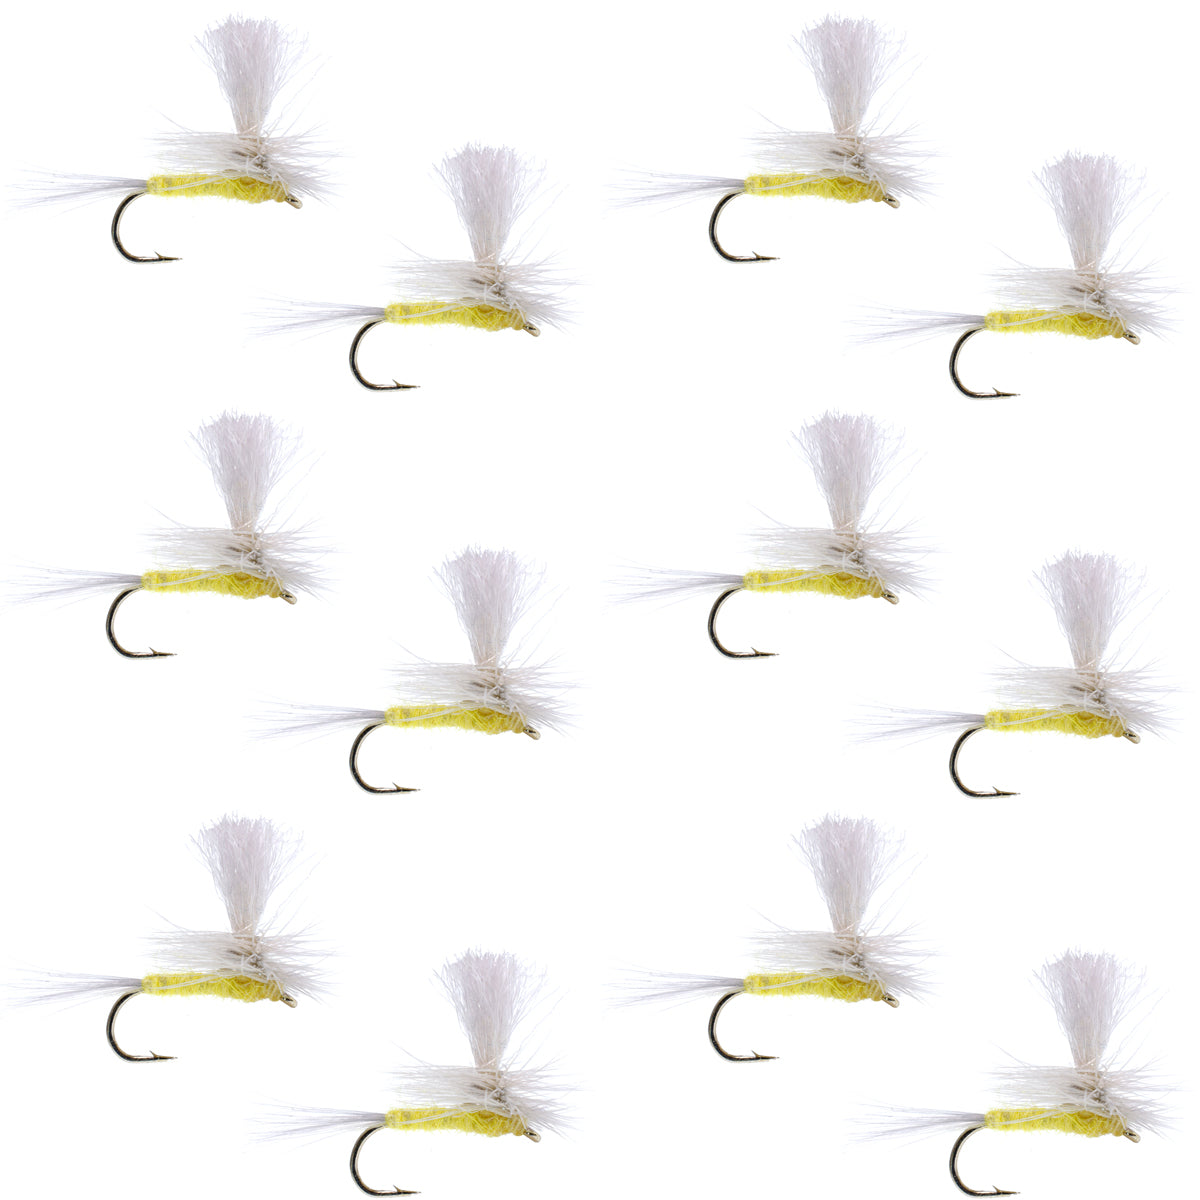 Pale Morning Dun Parachute PMD Classic Dry Fly - 1 Dozen Flies Hook Size 16